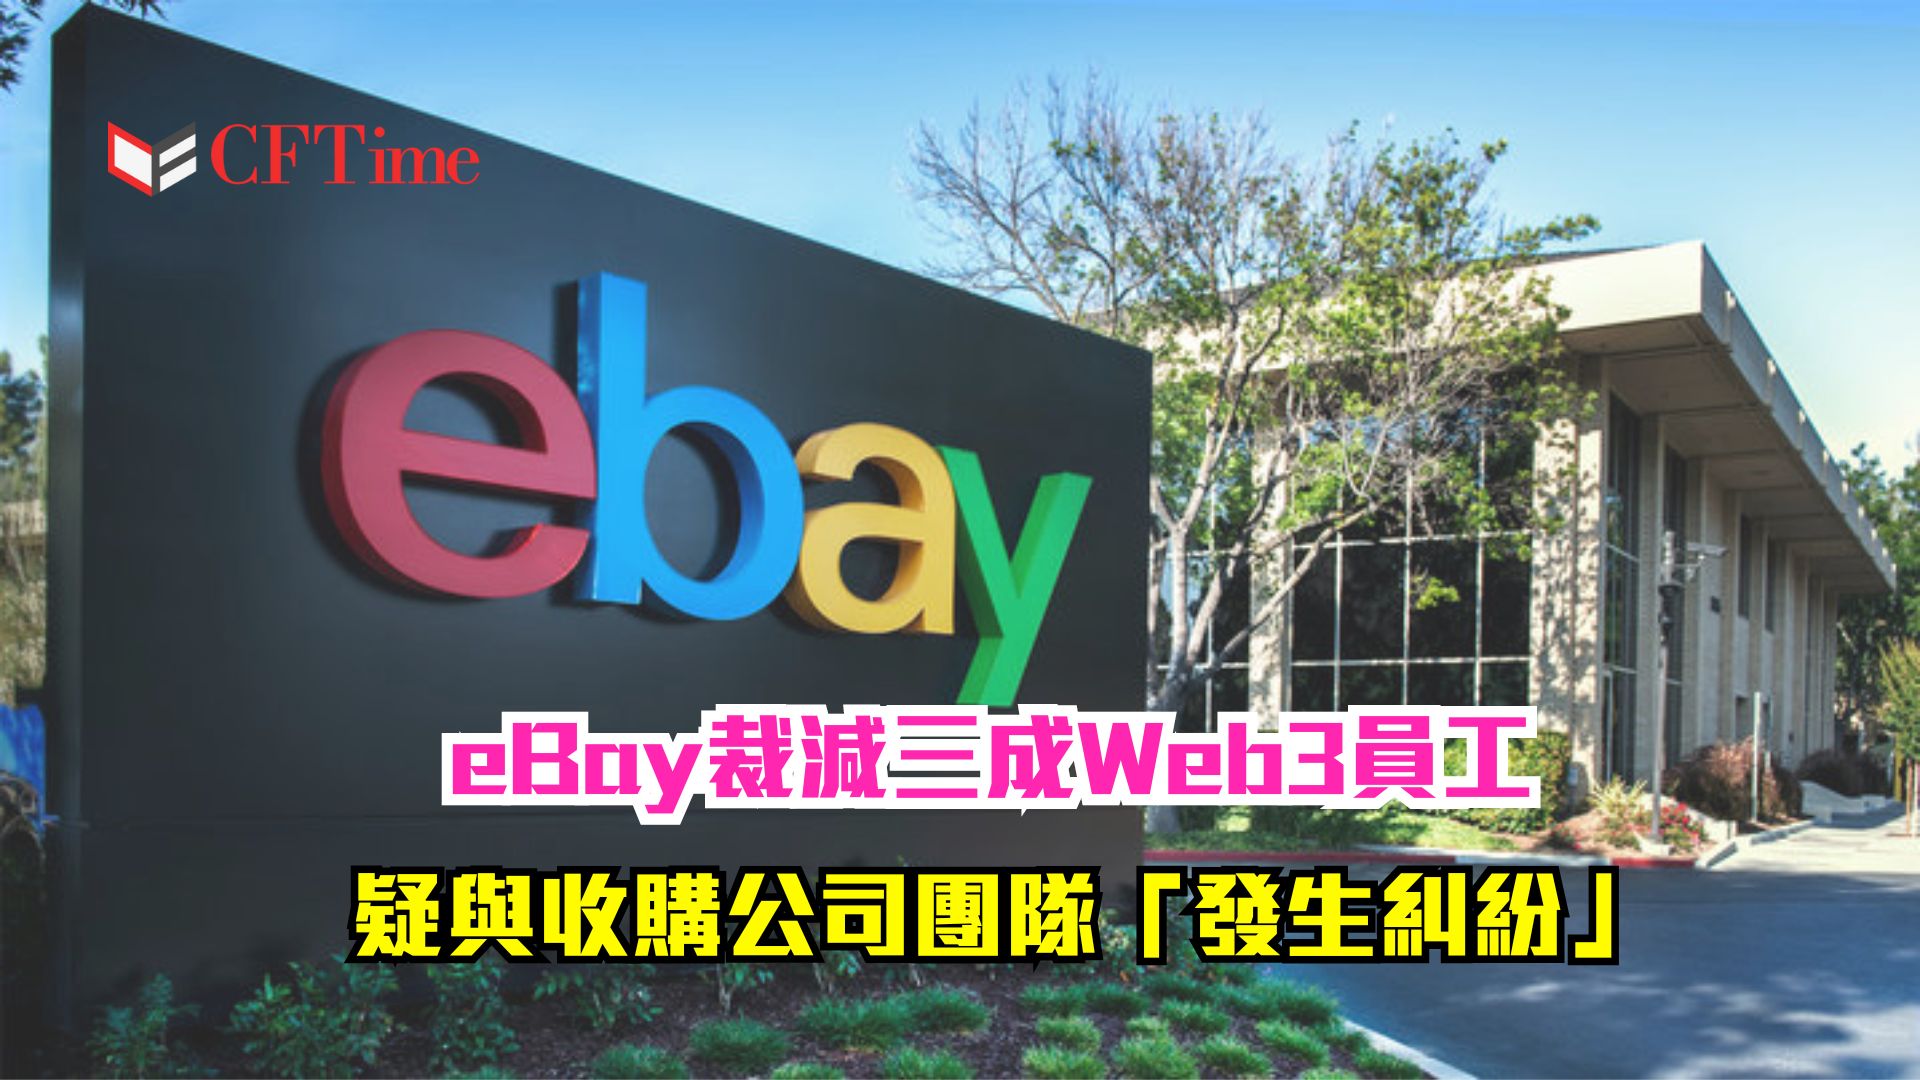 eBay裁減三成Web3員工